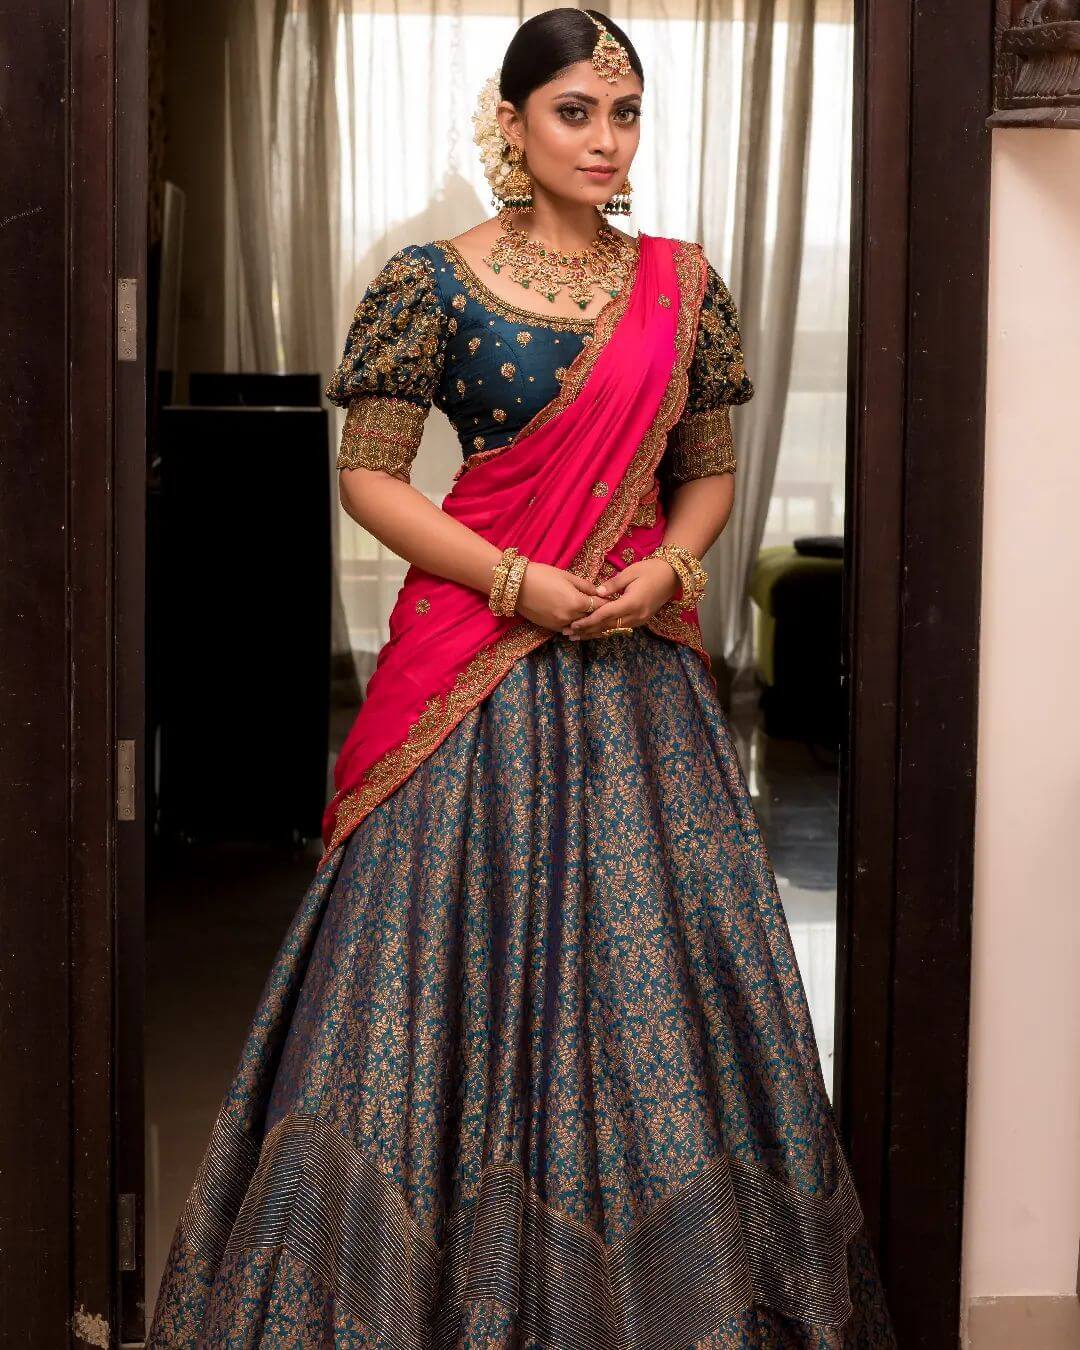 Ammu Abhirami Twirls In Blue & Golden Embellished Lehenga & Pink Dupatta With Kundan Jewellery Radiant Looks & Outfits